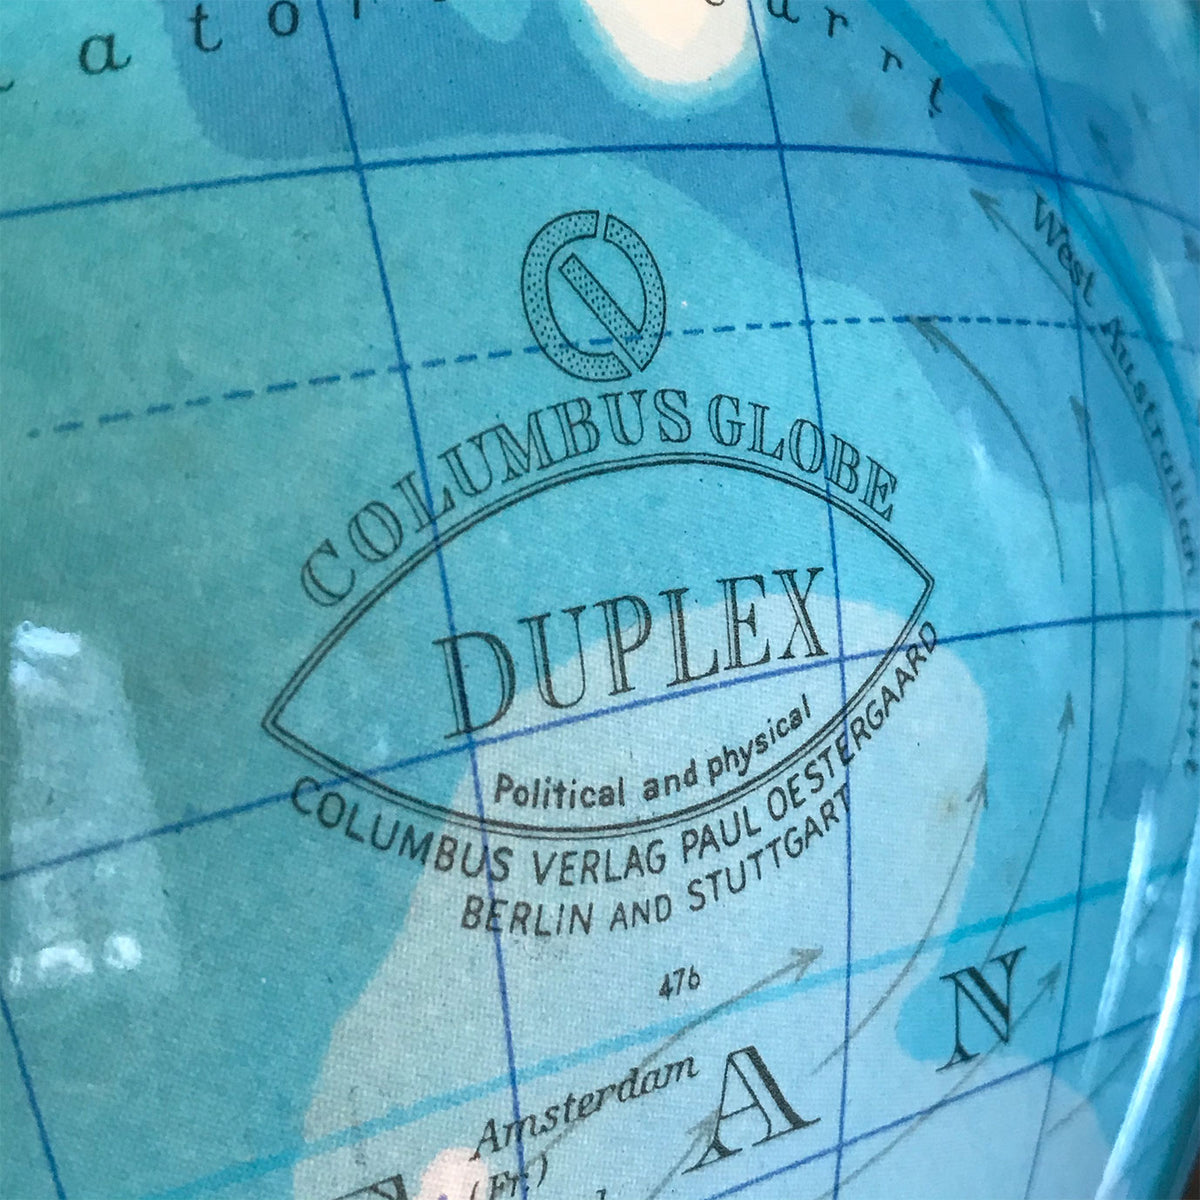 Columbus World Globe Duplex